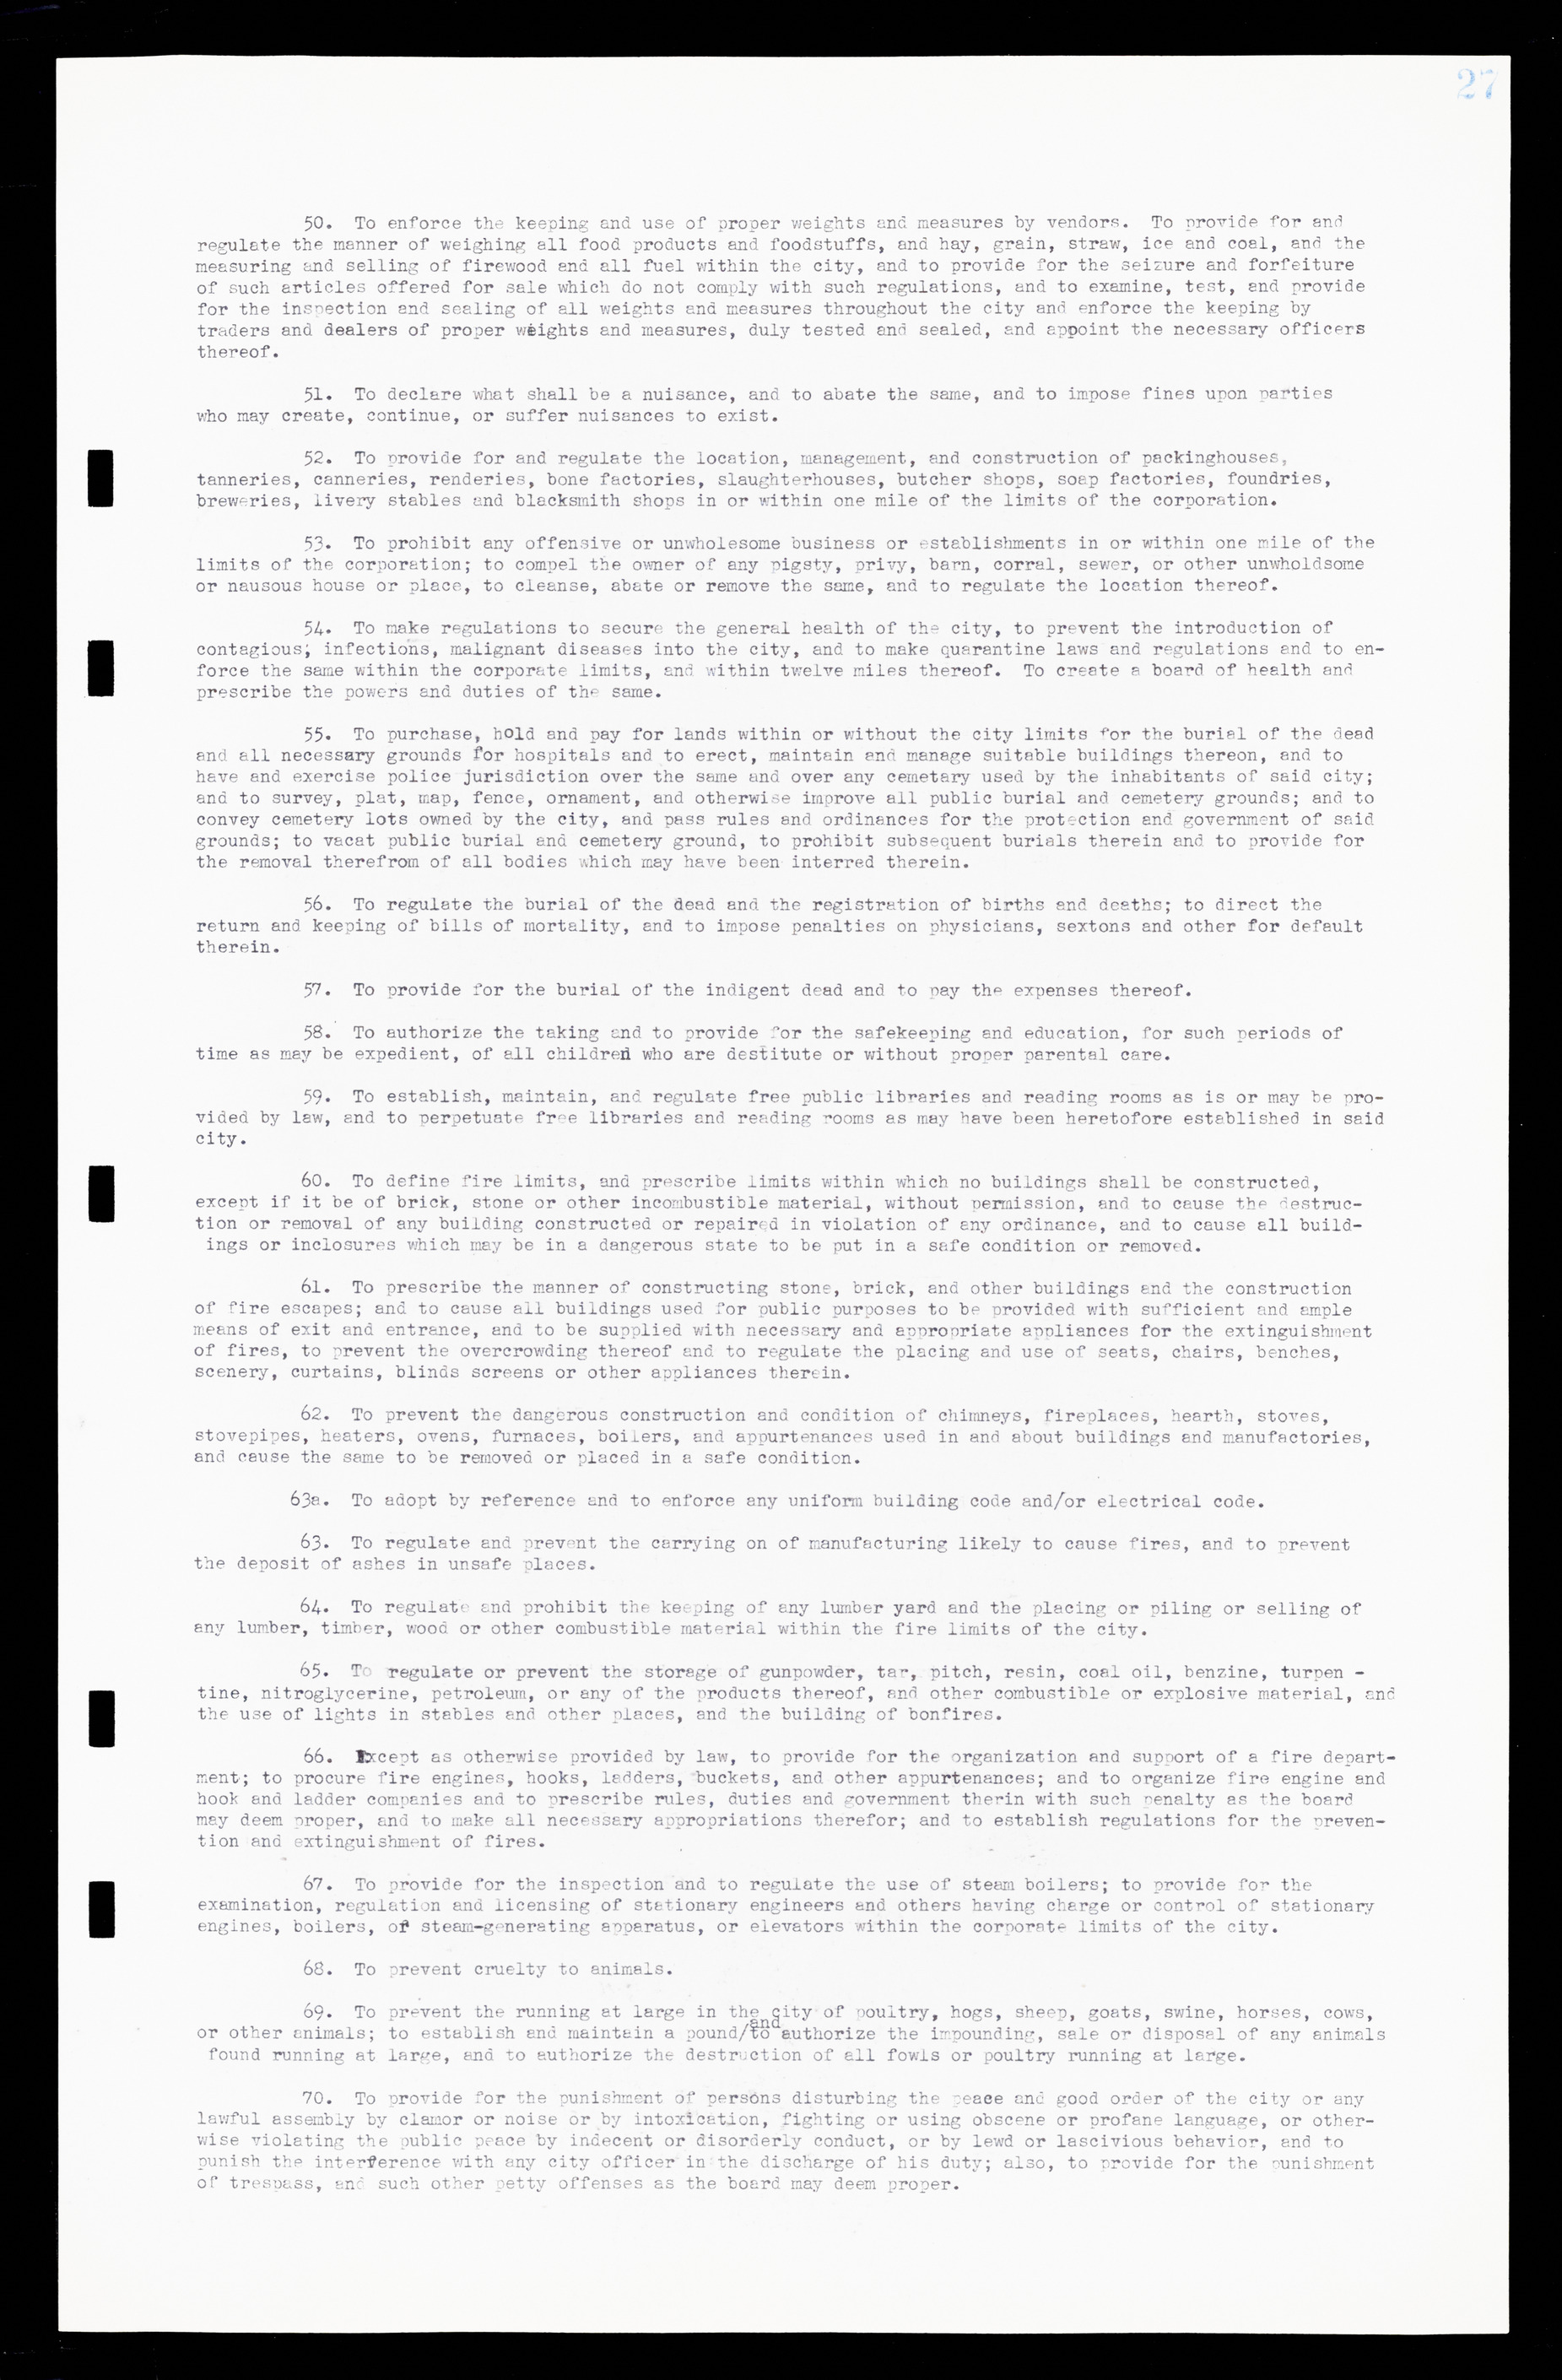 Las Vegas City Commission Minutes, February 17, 1937 to August 4, 1942, lvc000004-33